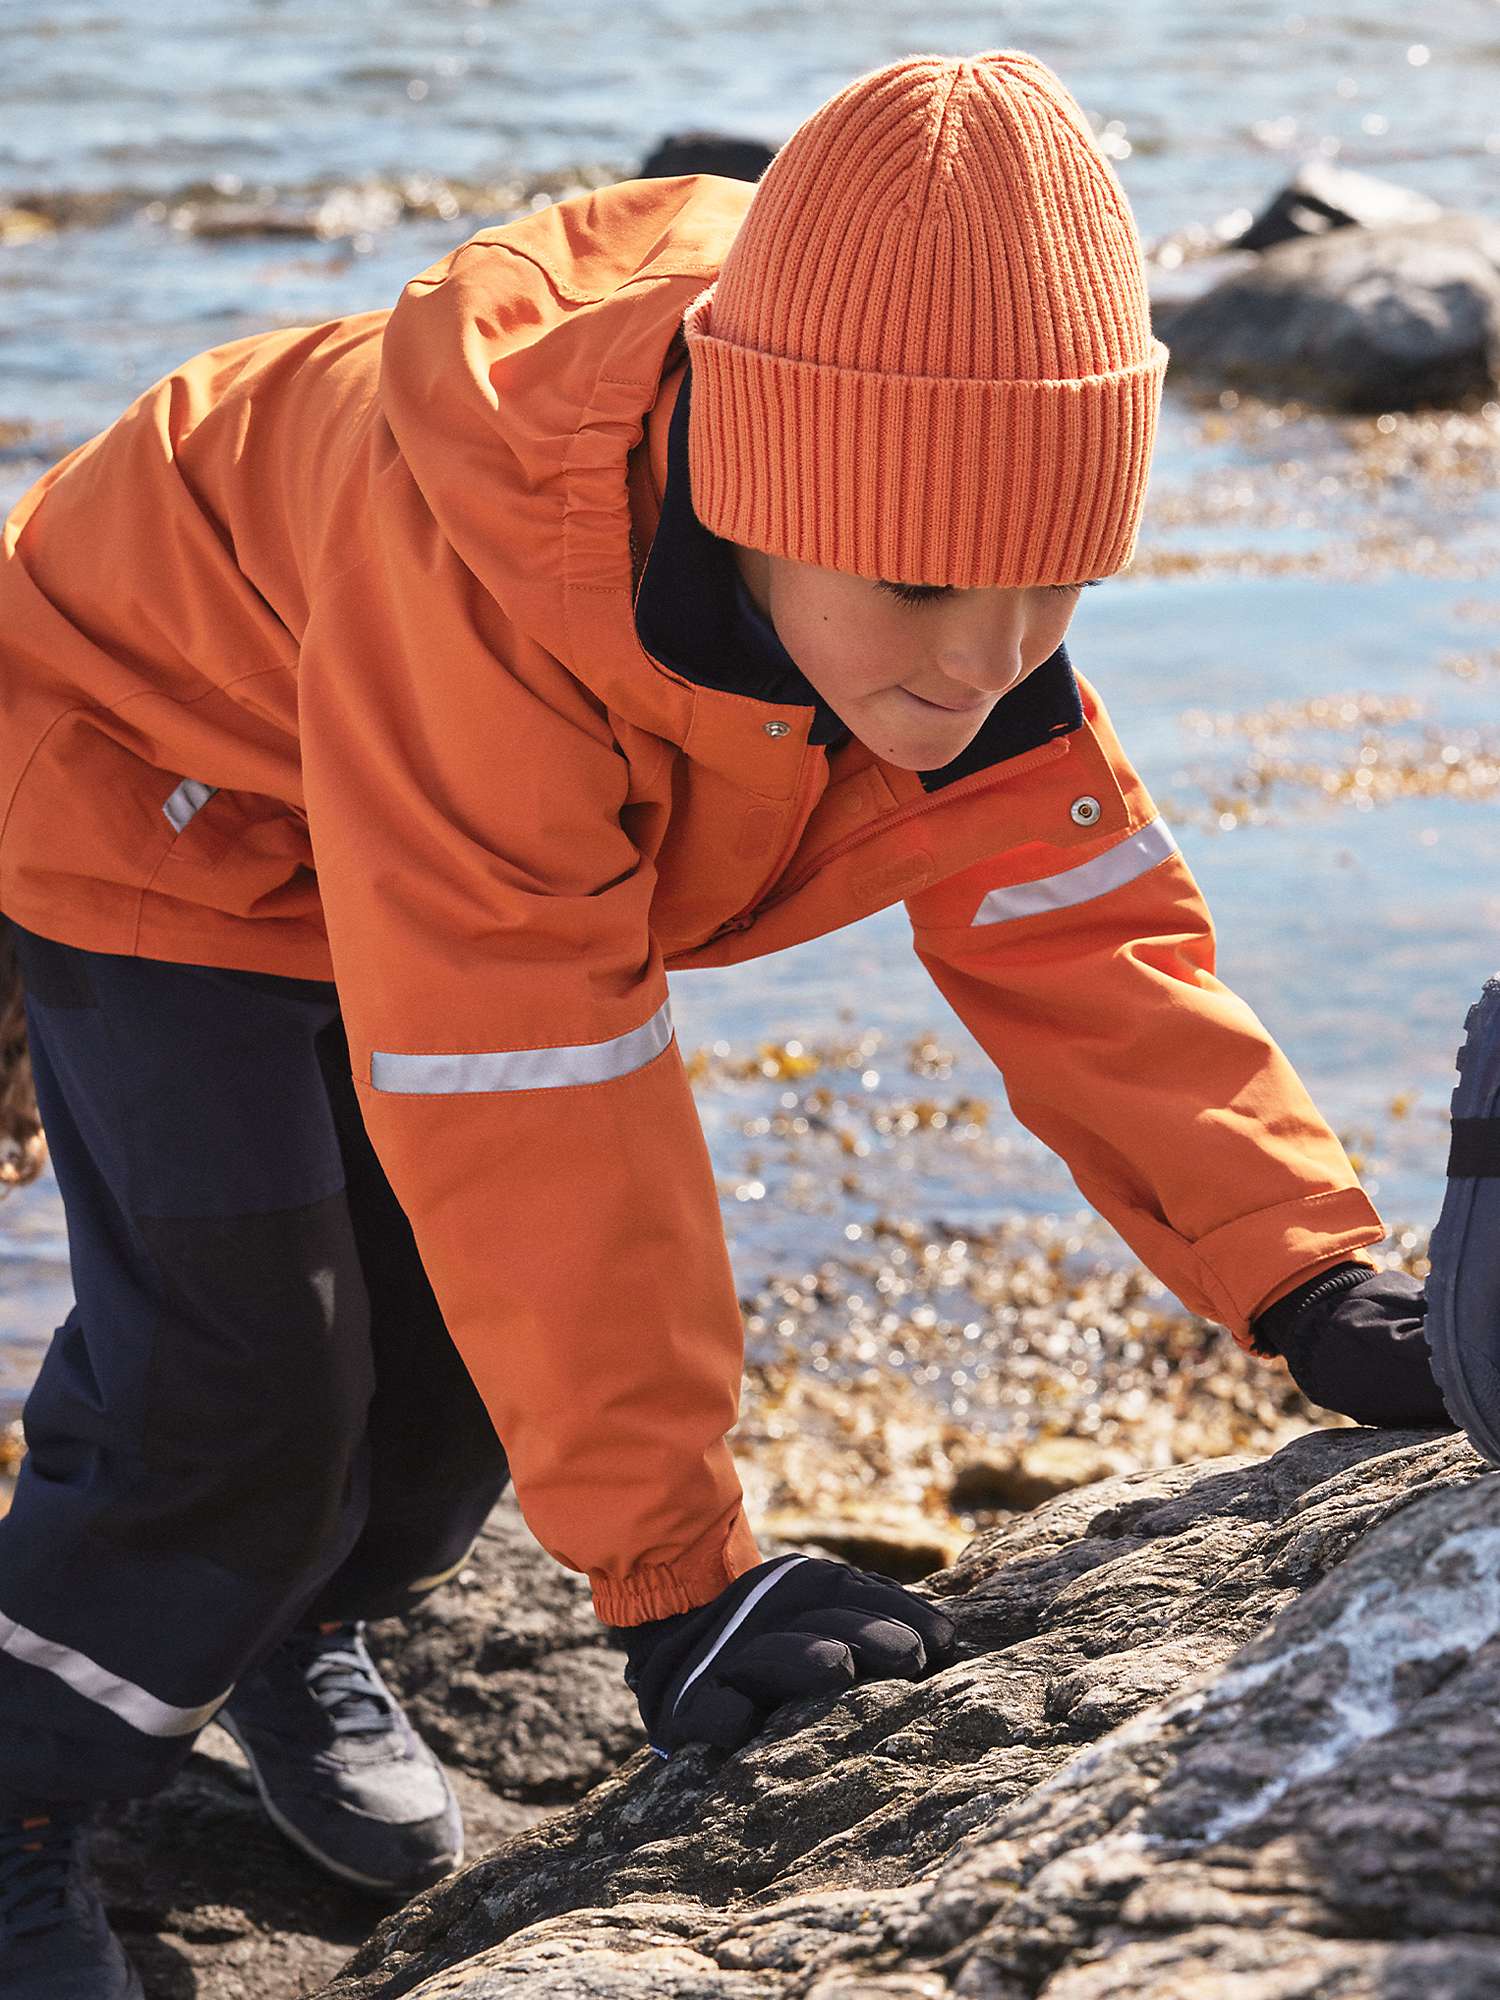 Buy Polarn O. Pyret Kids' Waterproof Shell Coat Online at johnlewis.com